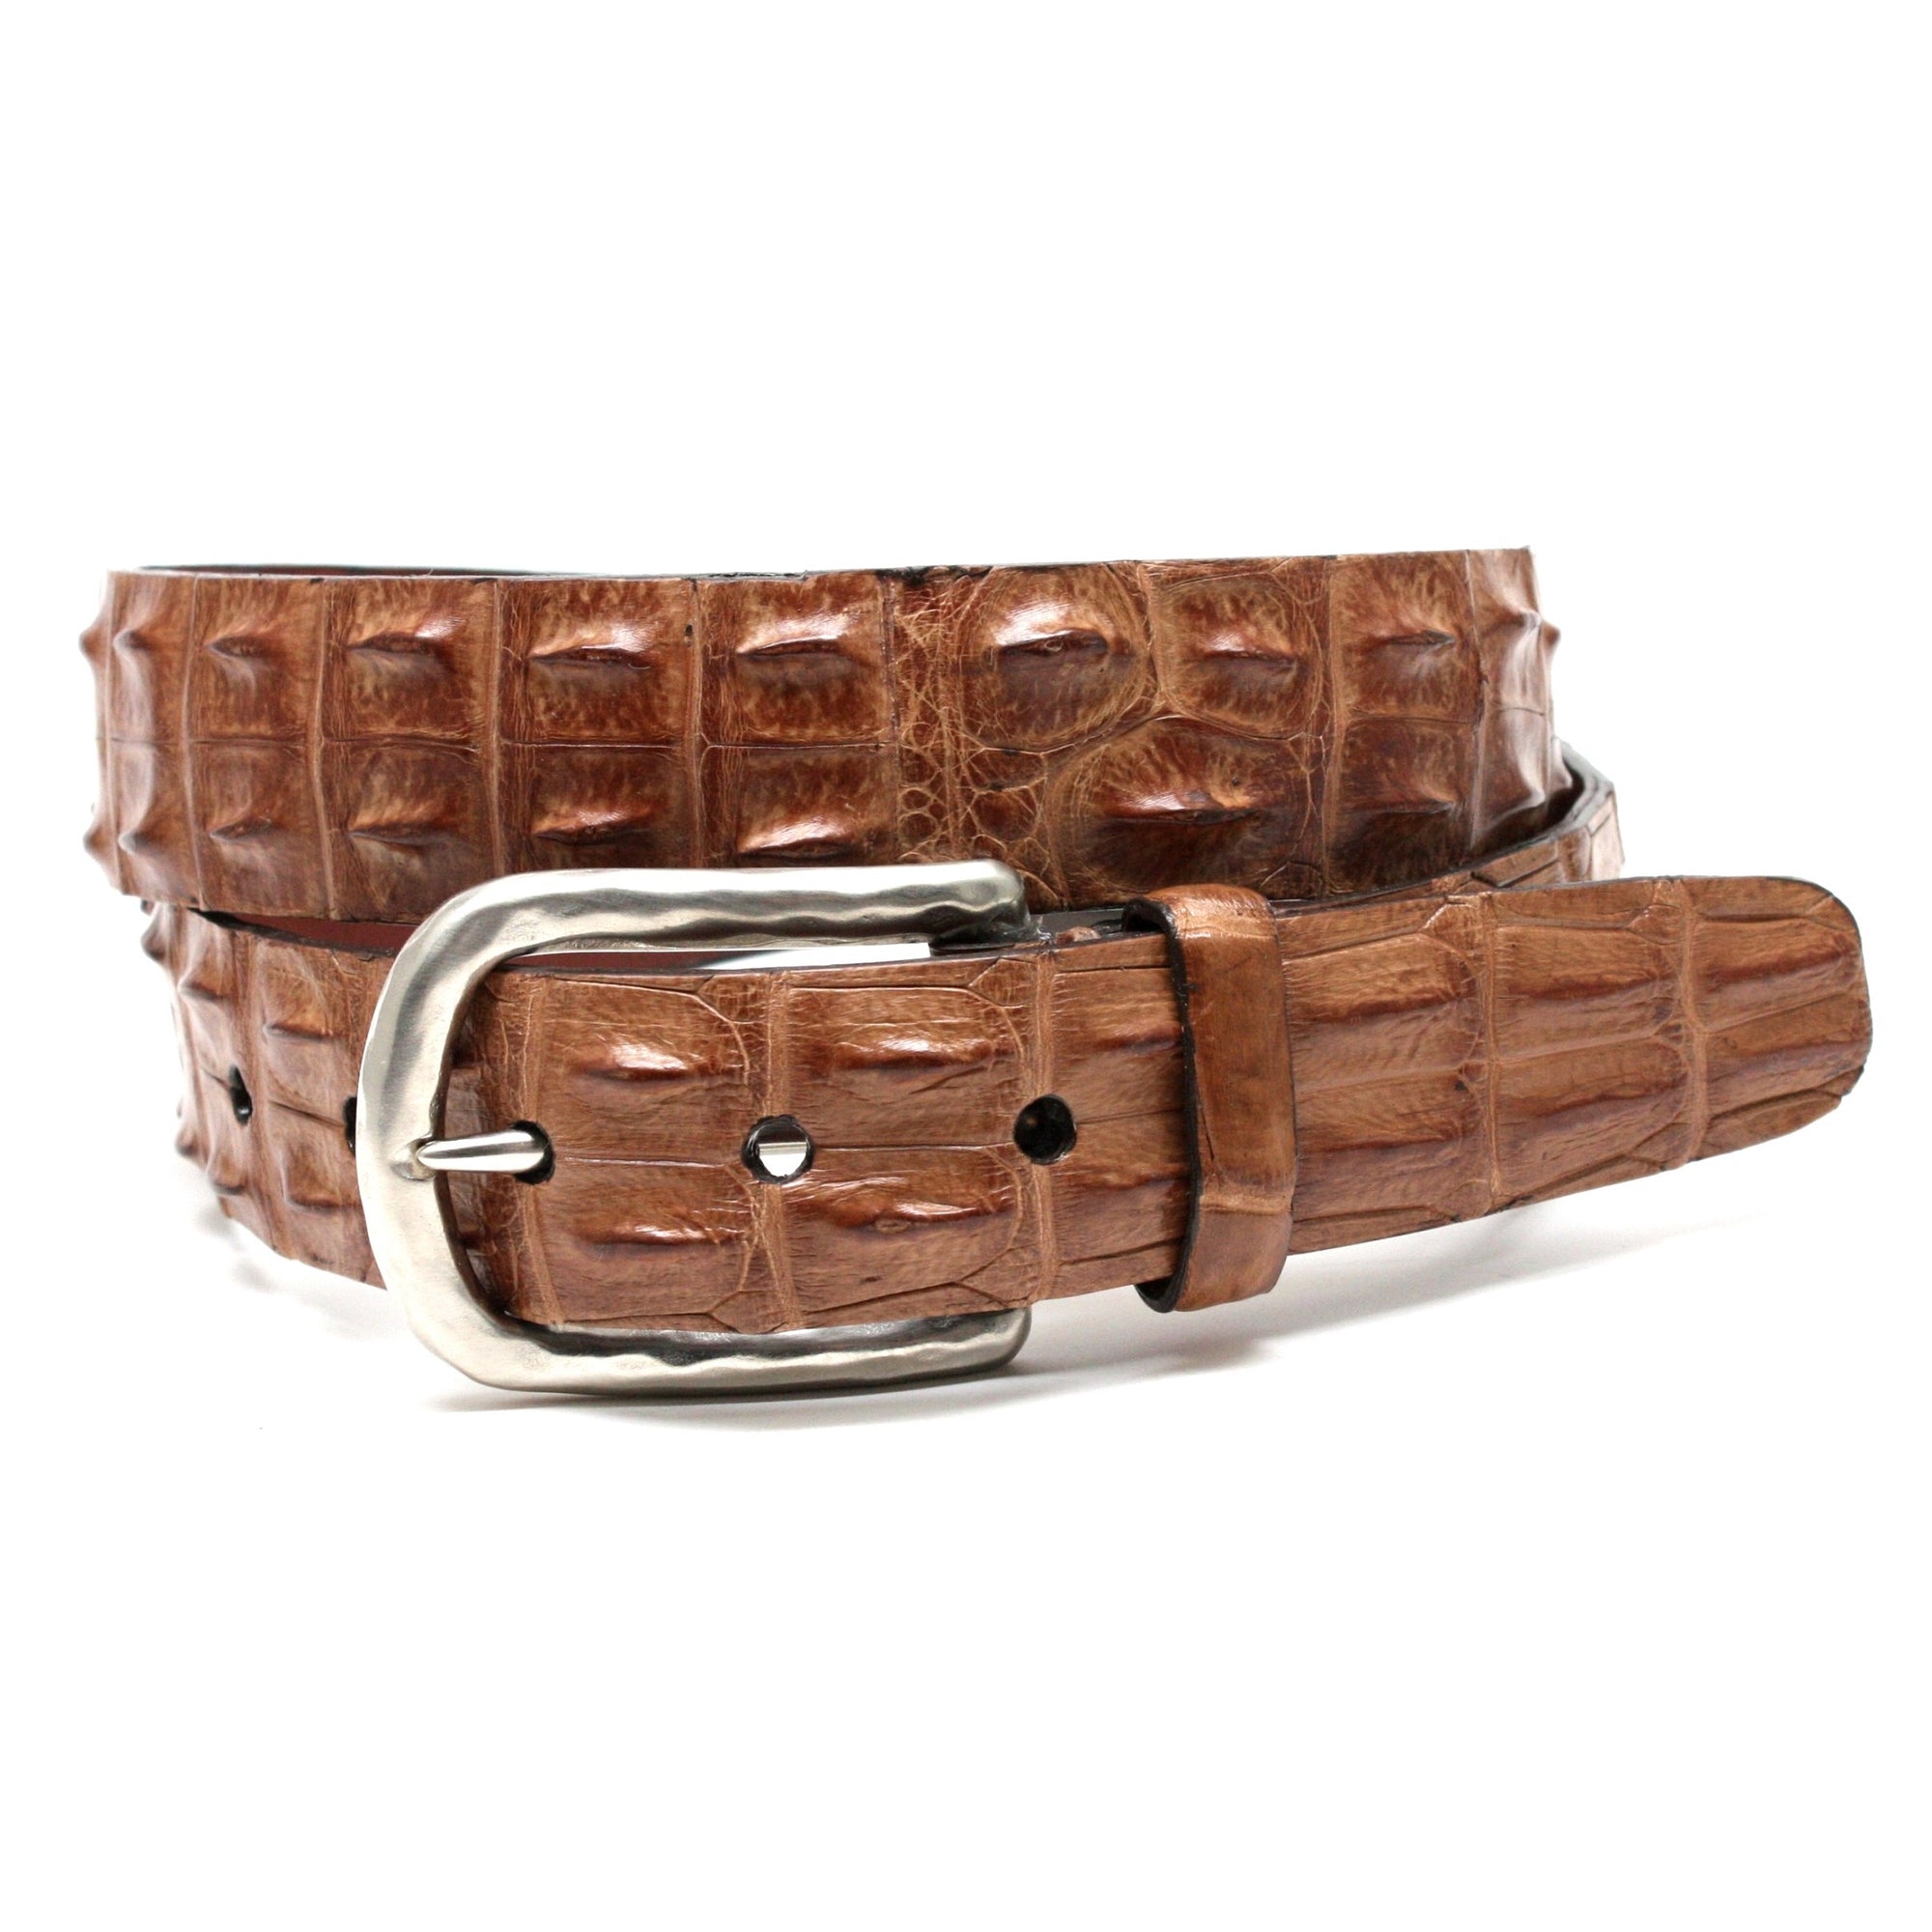 Hornback Crocodile Belt in Saddle Tan by Torino Leather